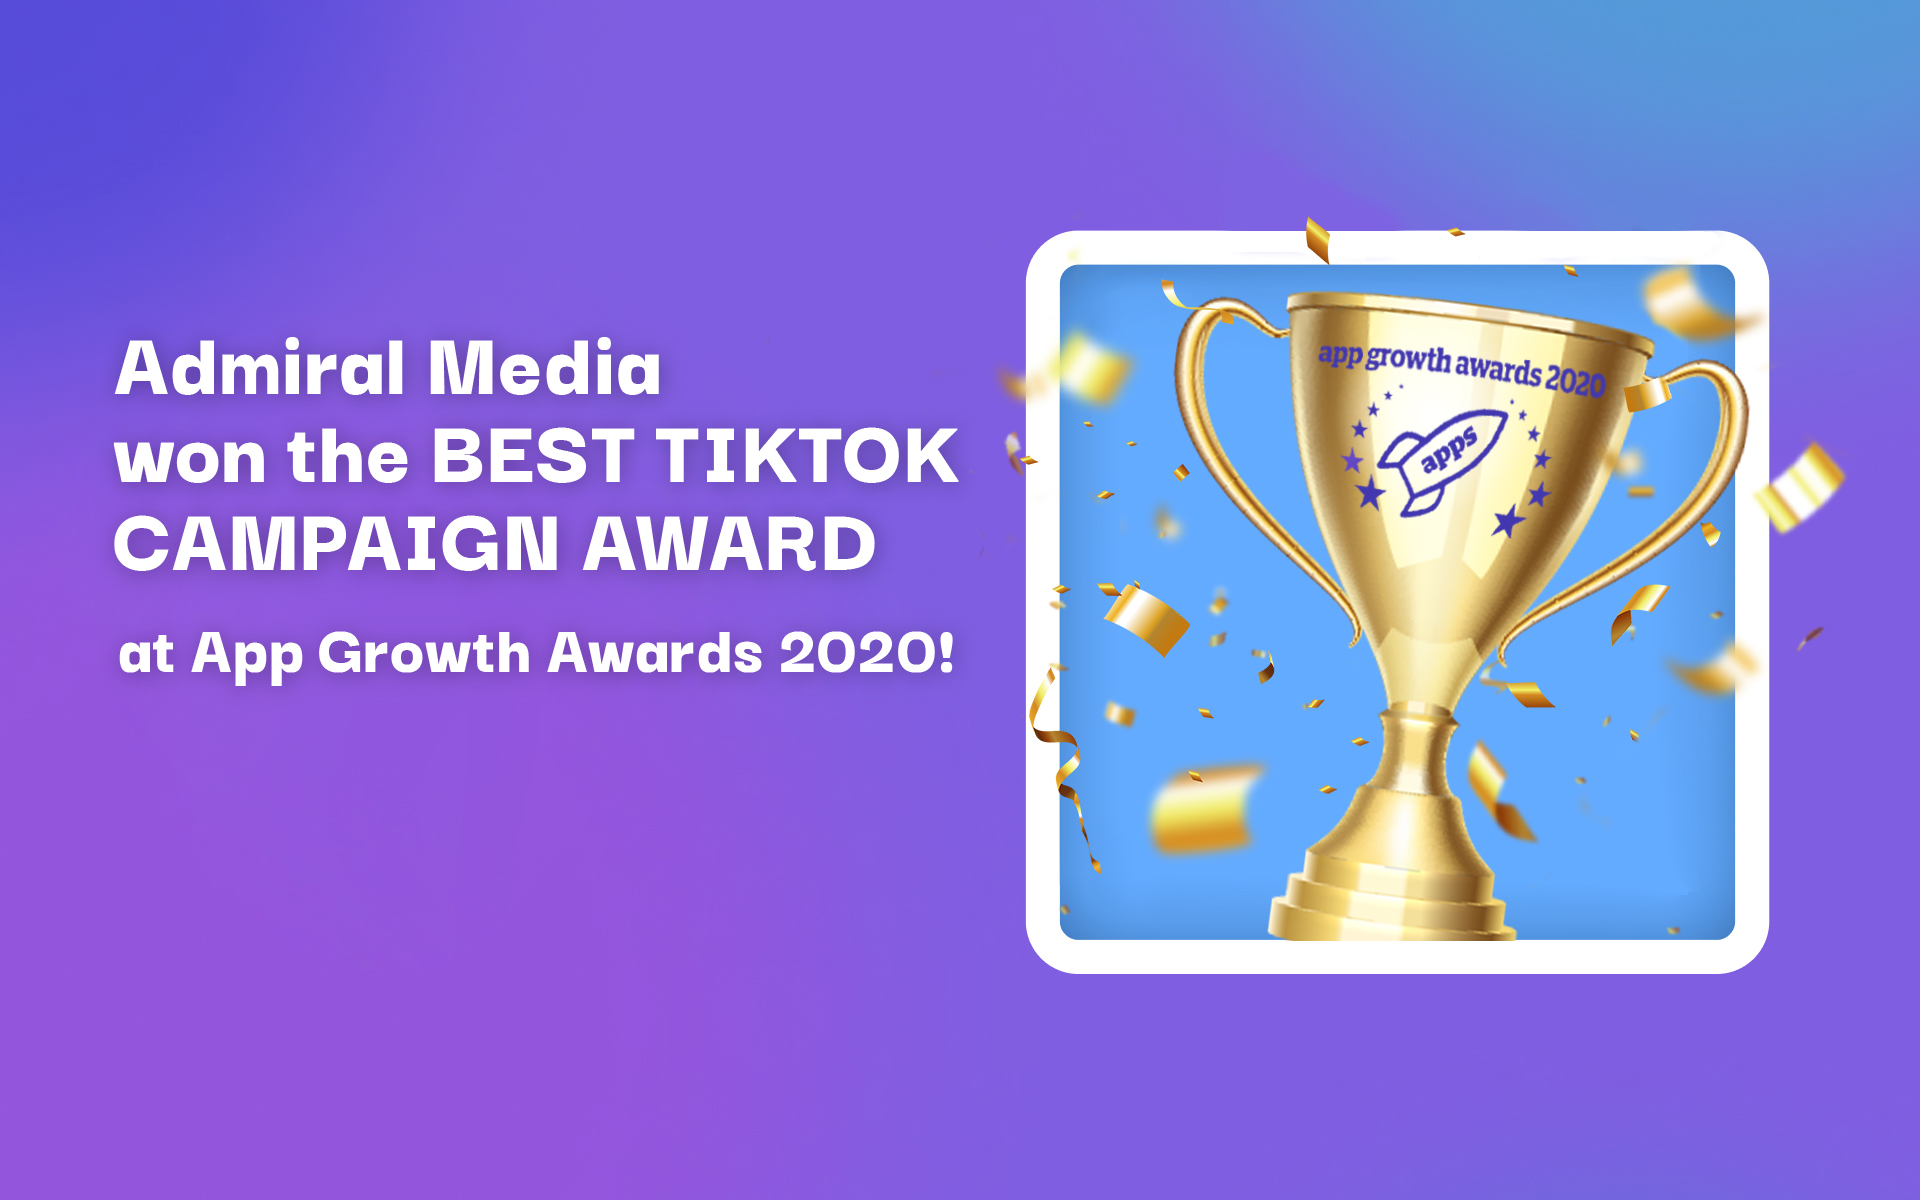 Admiral Media won the best TikTok Campaign Award